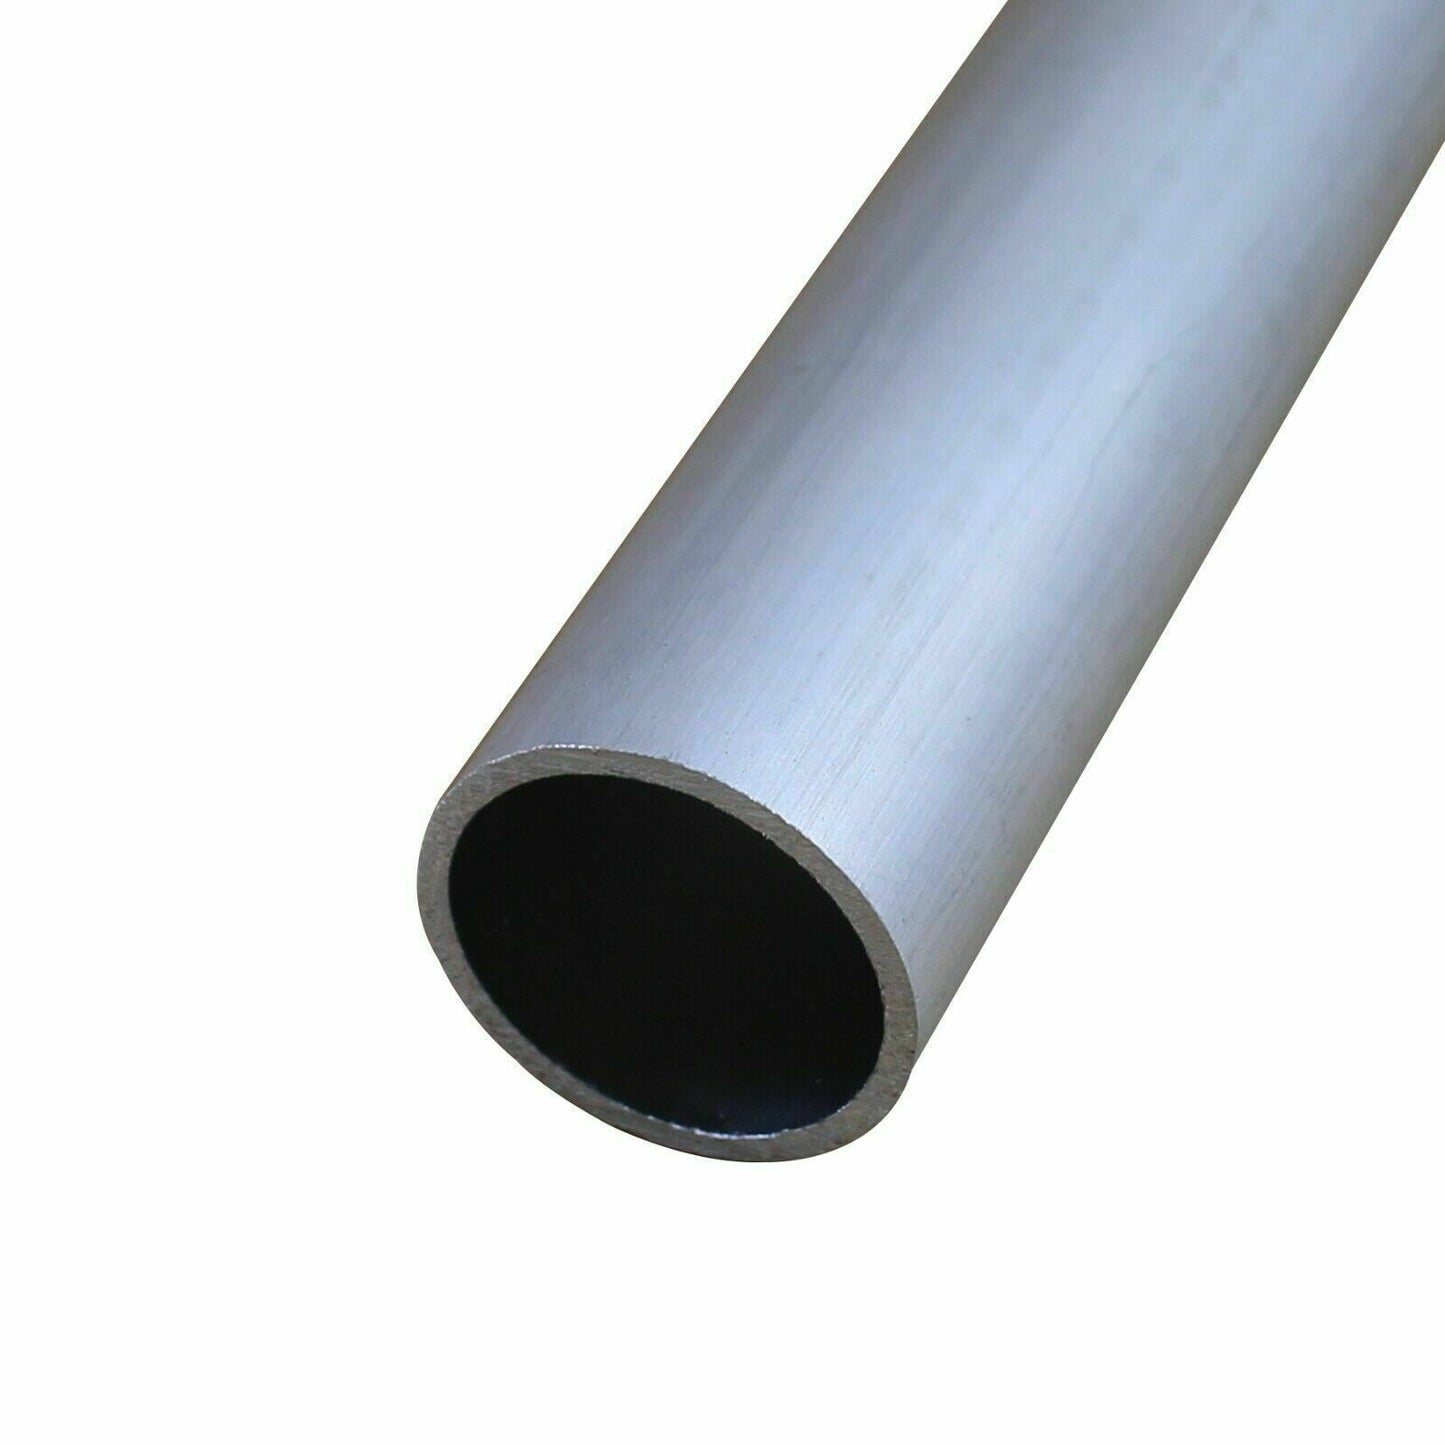 OD 38 mm ID 32 mm 1 pièce Tube rond en aluminium